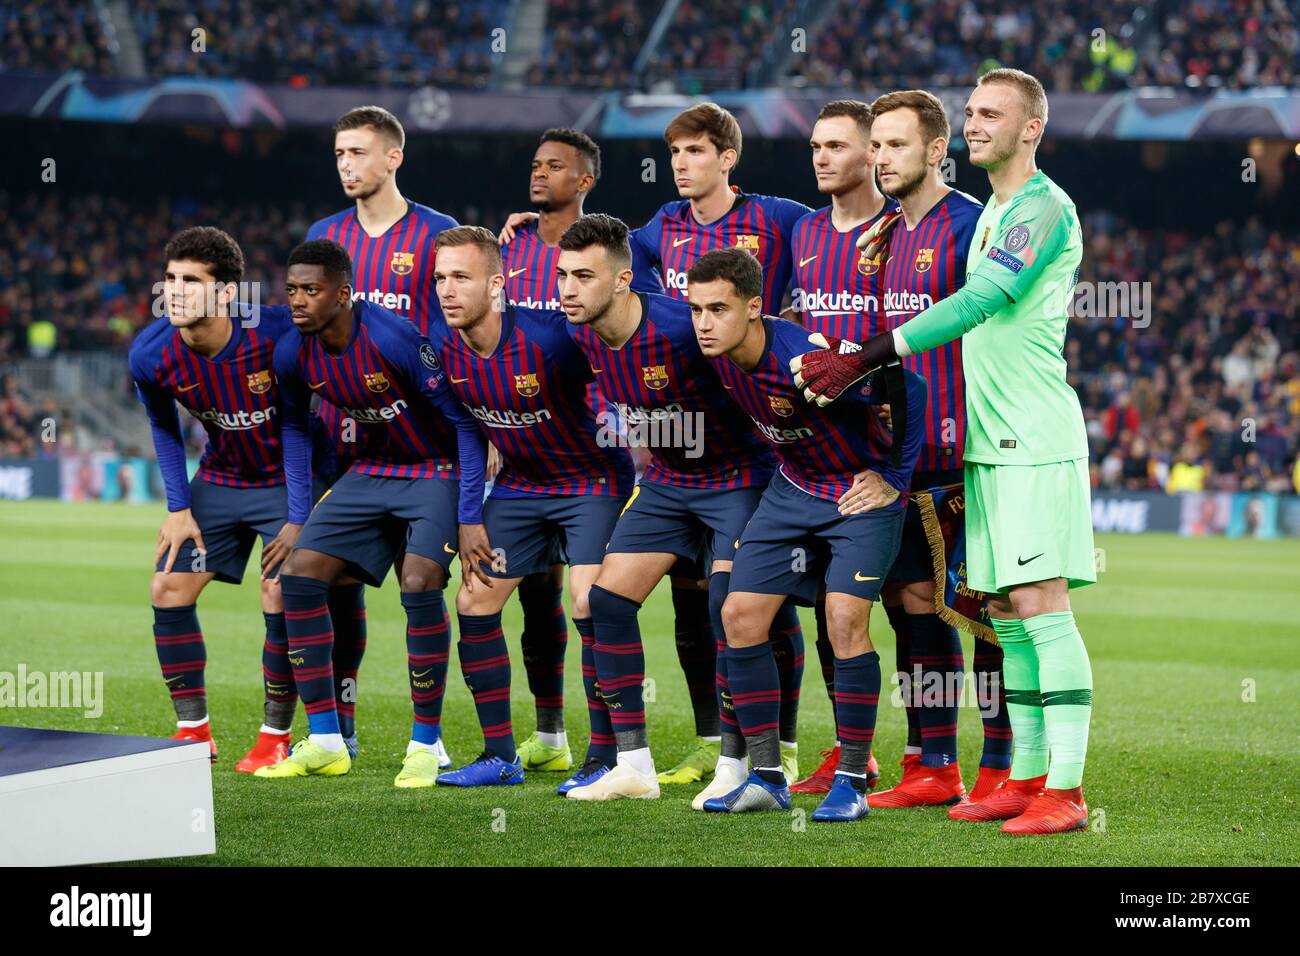 barcelona uefa group